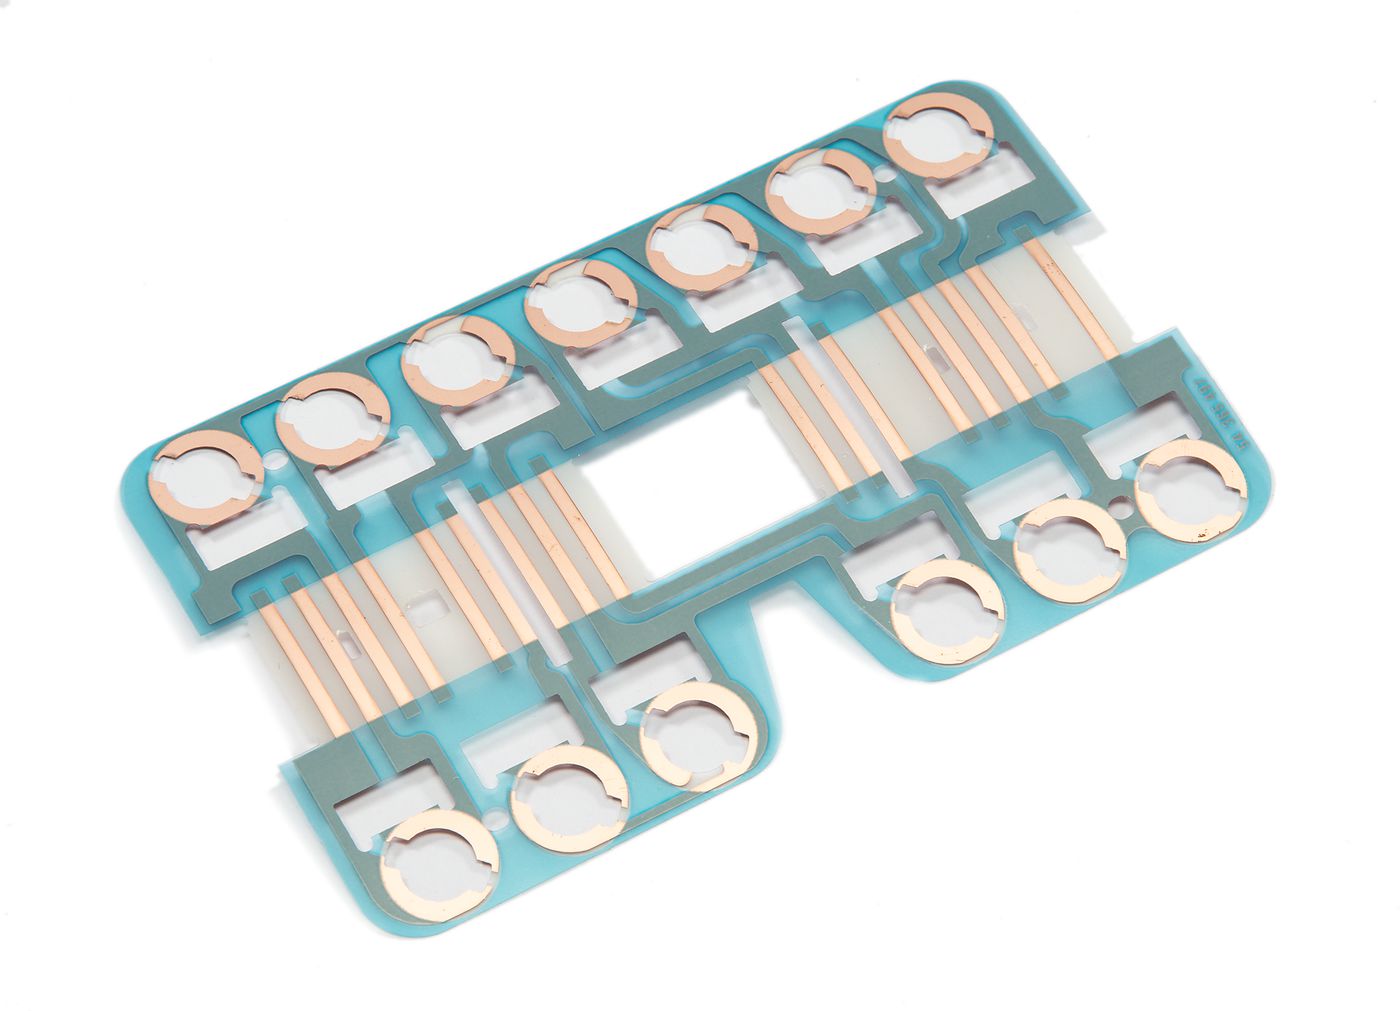 Gedruckte Leiterplatte
Printed circuit board
Platine de circuit 